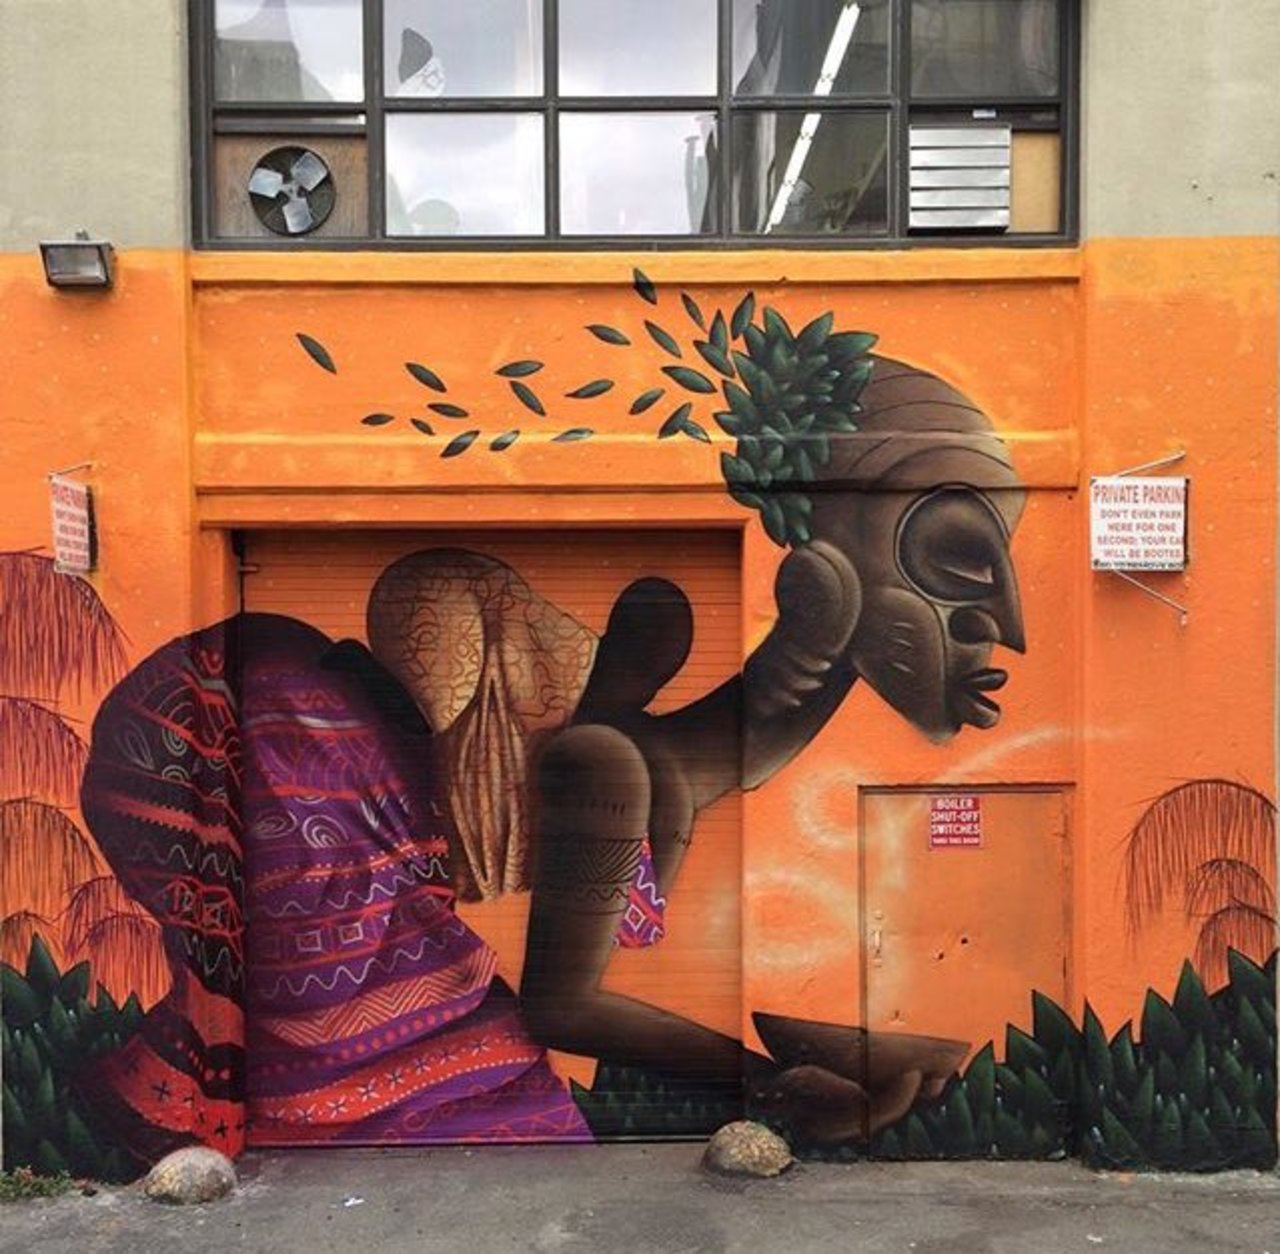 New tumblr post: "New Street Art by Alexandre Keto in NYC 

#art #graffiti #mural #streetart https://t.co/cQMhKU6JM9" …